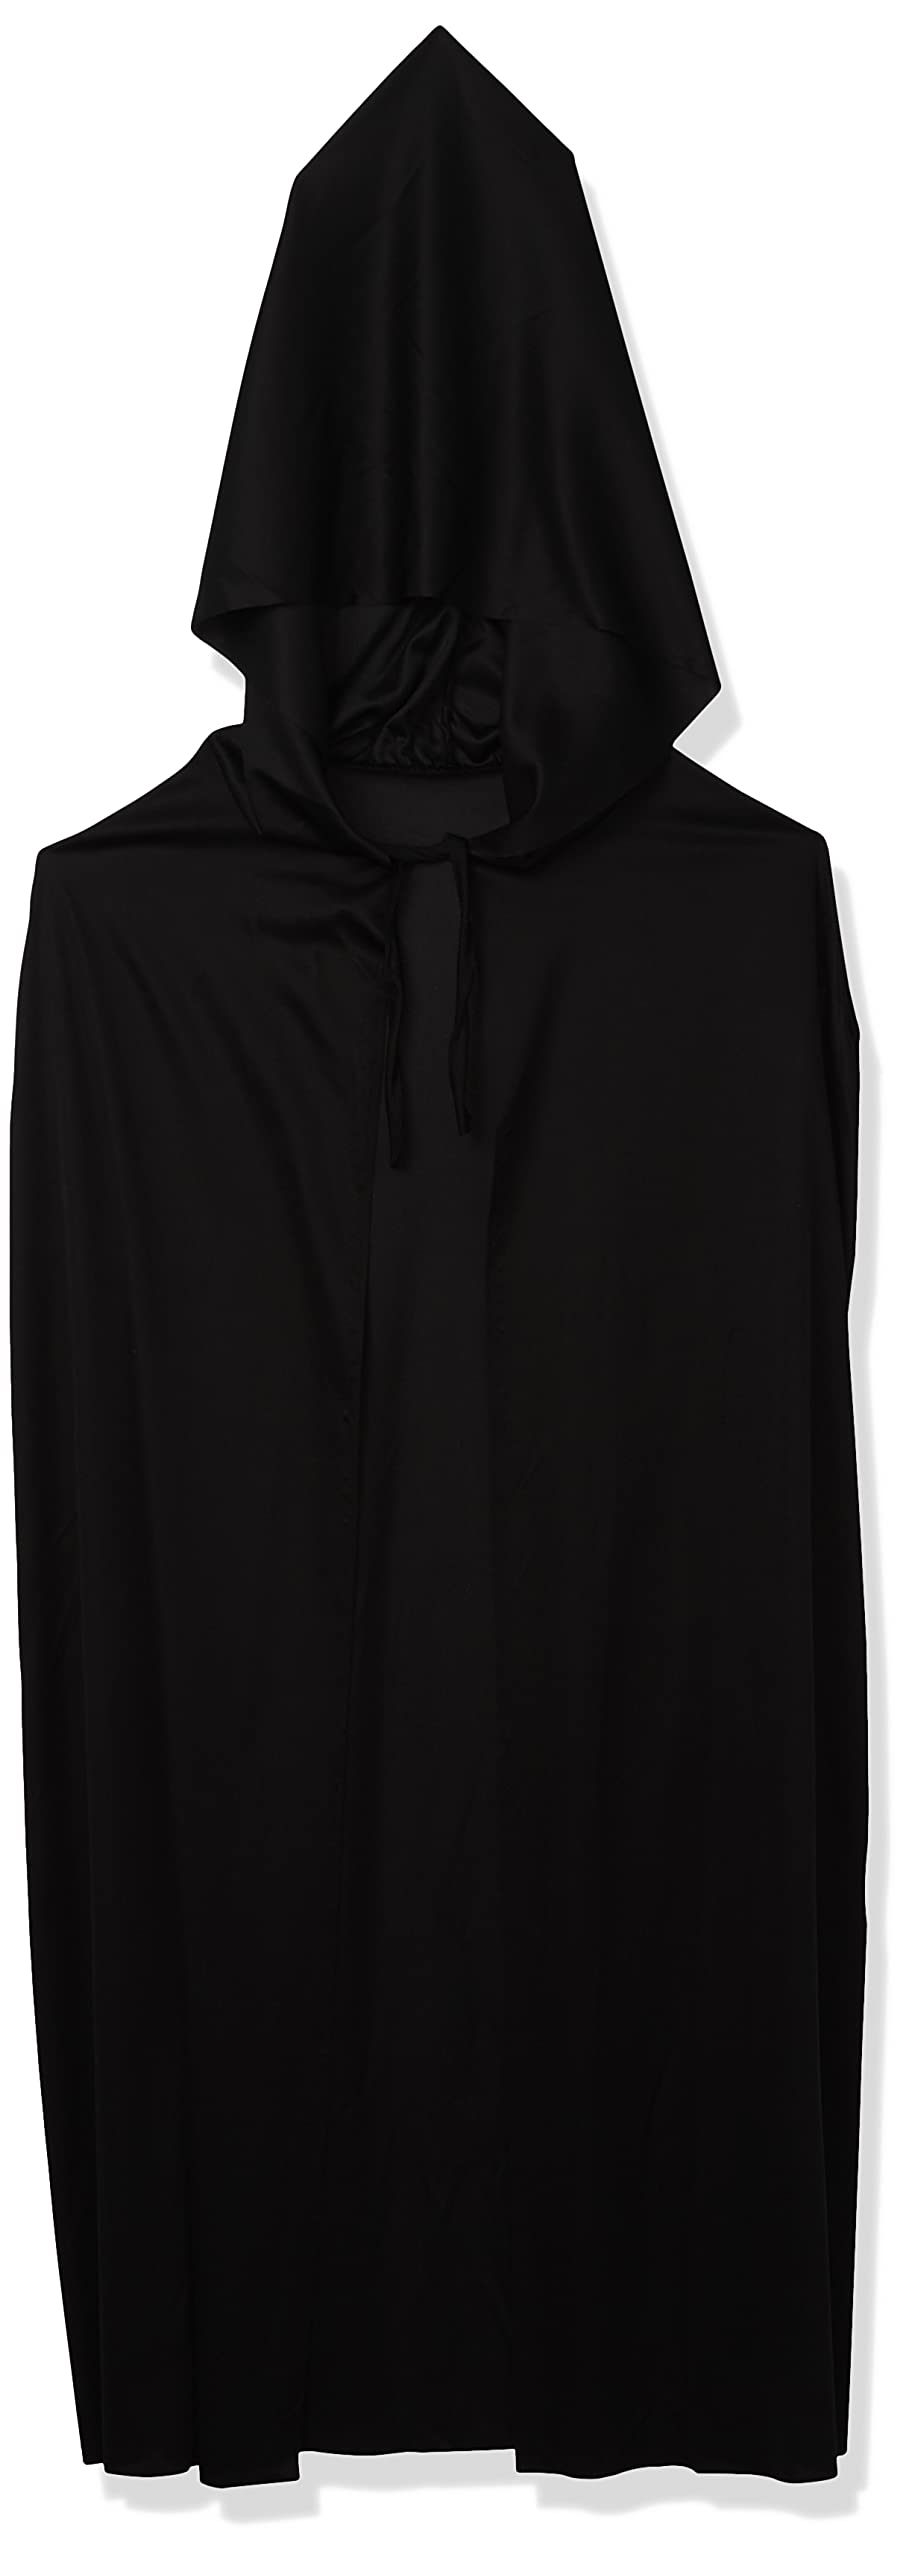 [Australia] - Rubie's Costume Hooded Cape 3/4 Length Costume One Size Black 